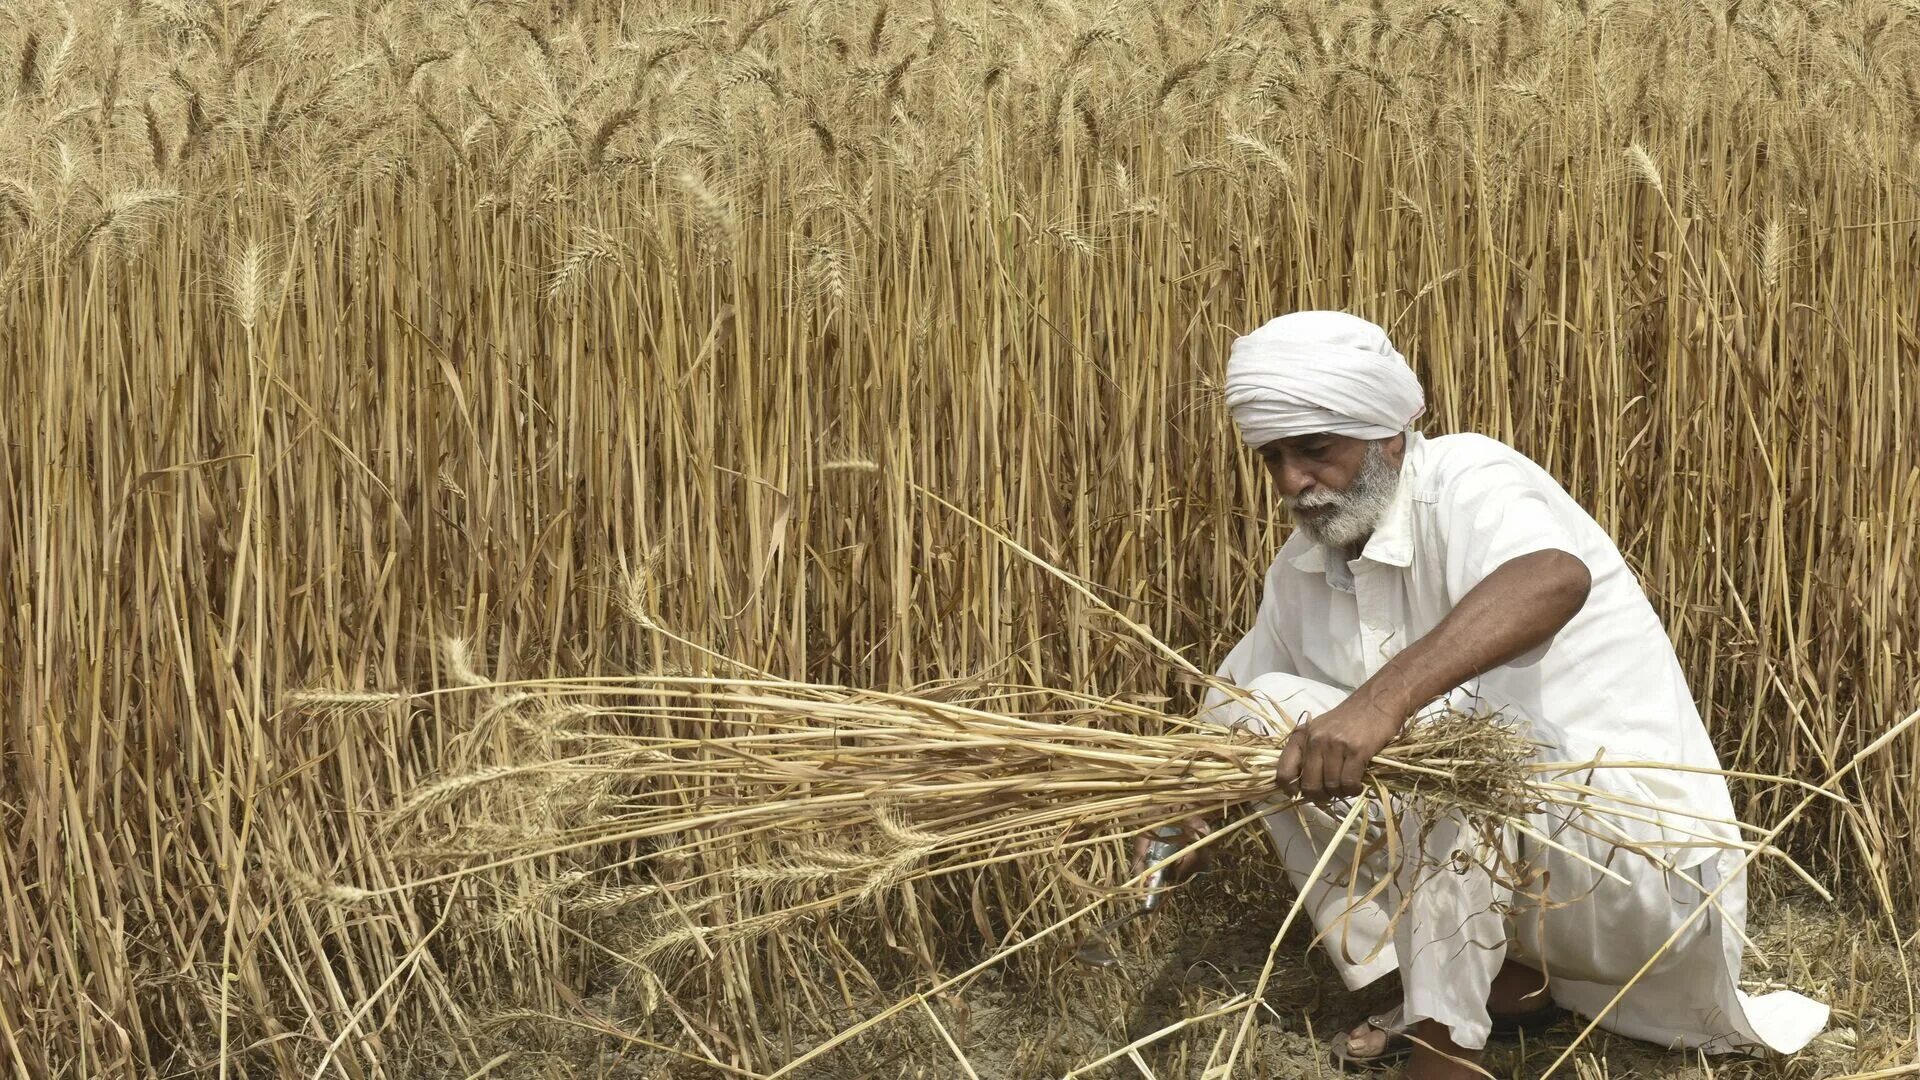 In northern india they harvest their wheat. Индия пшеница. Сбор пшеницы в Индии. Праздник пшеницы в Индии. Сорта пшеницы в Индии.